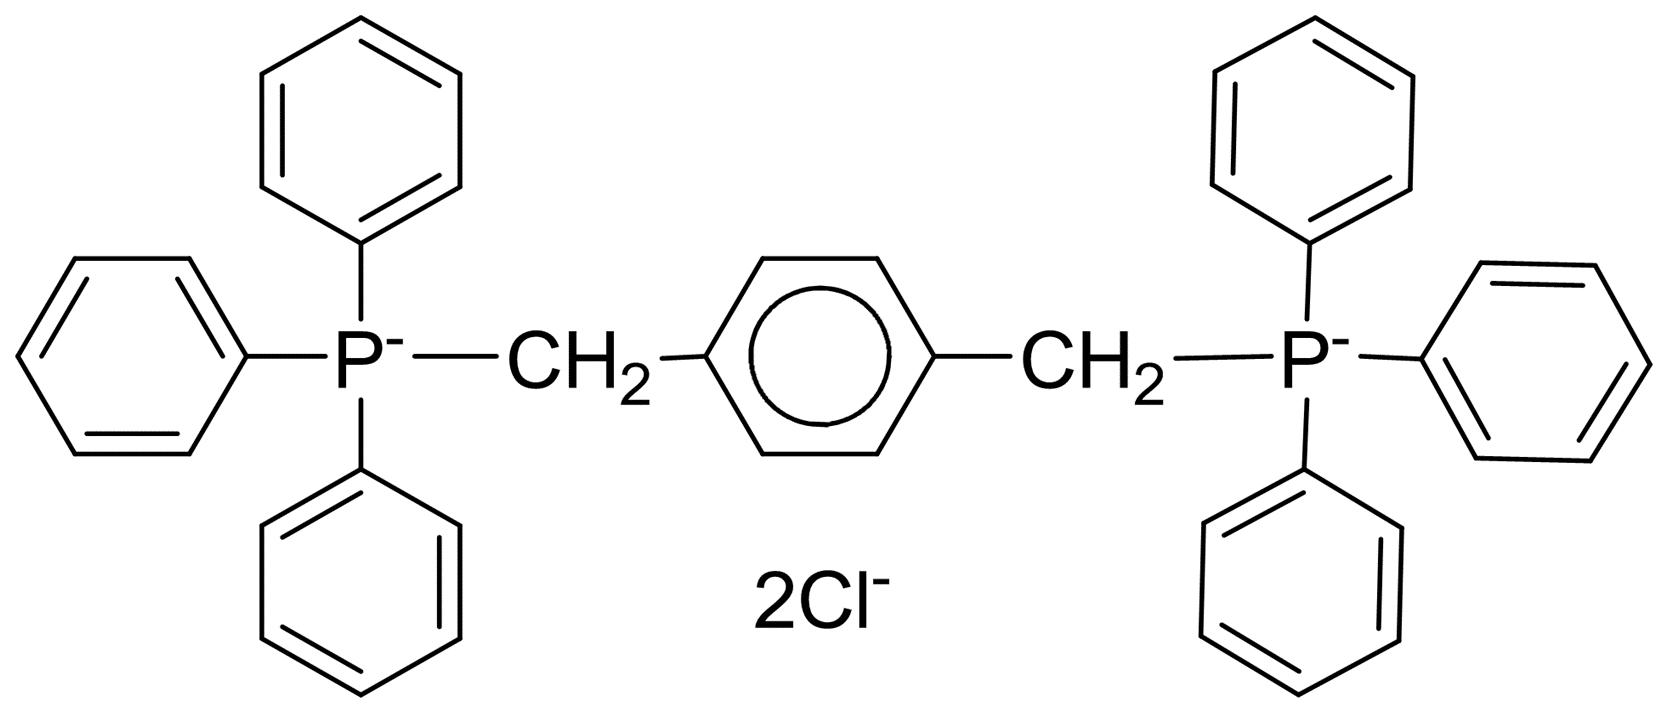 Phosphonium, (1,4-phenylenebis(methylene))bis(triphenyl-, dichloride